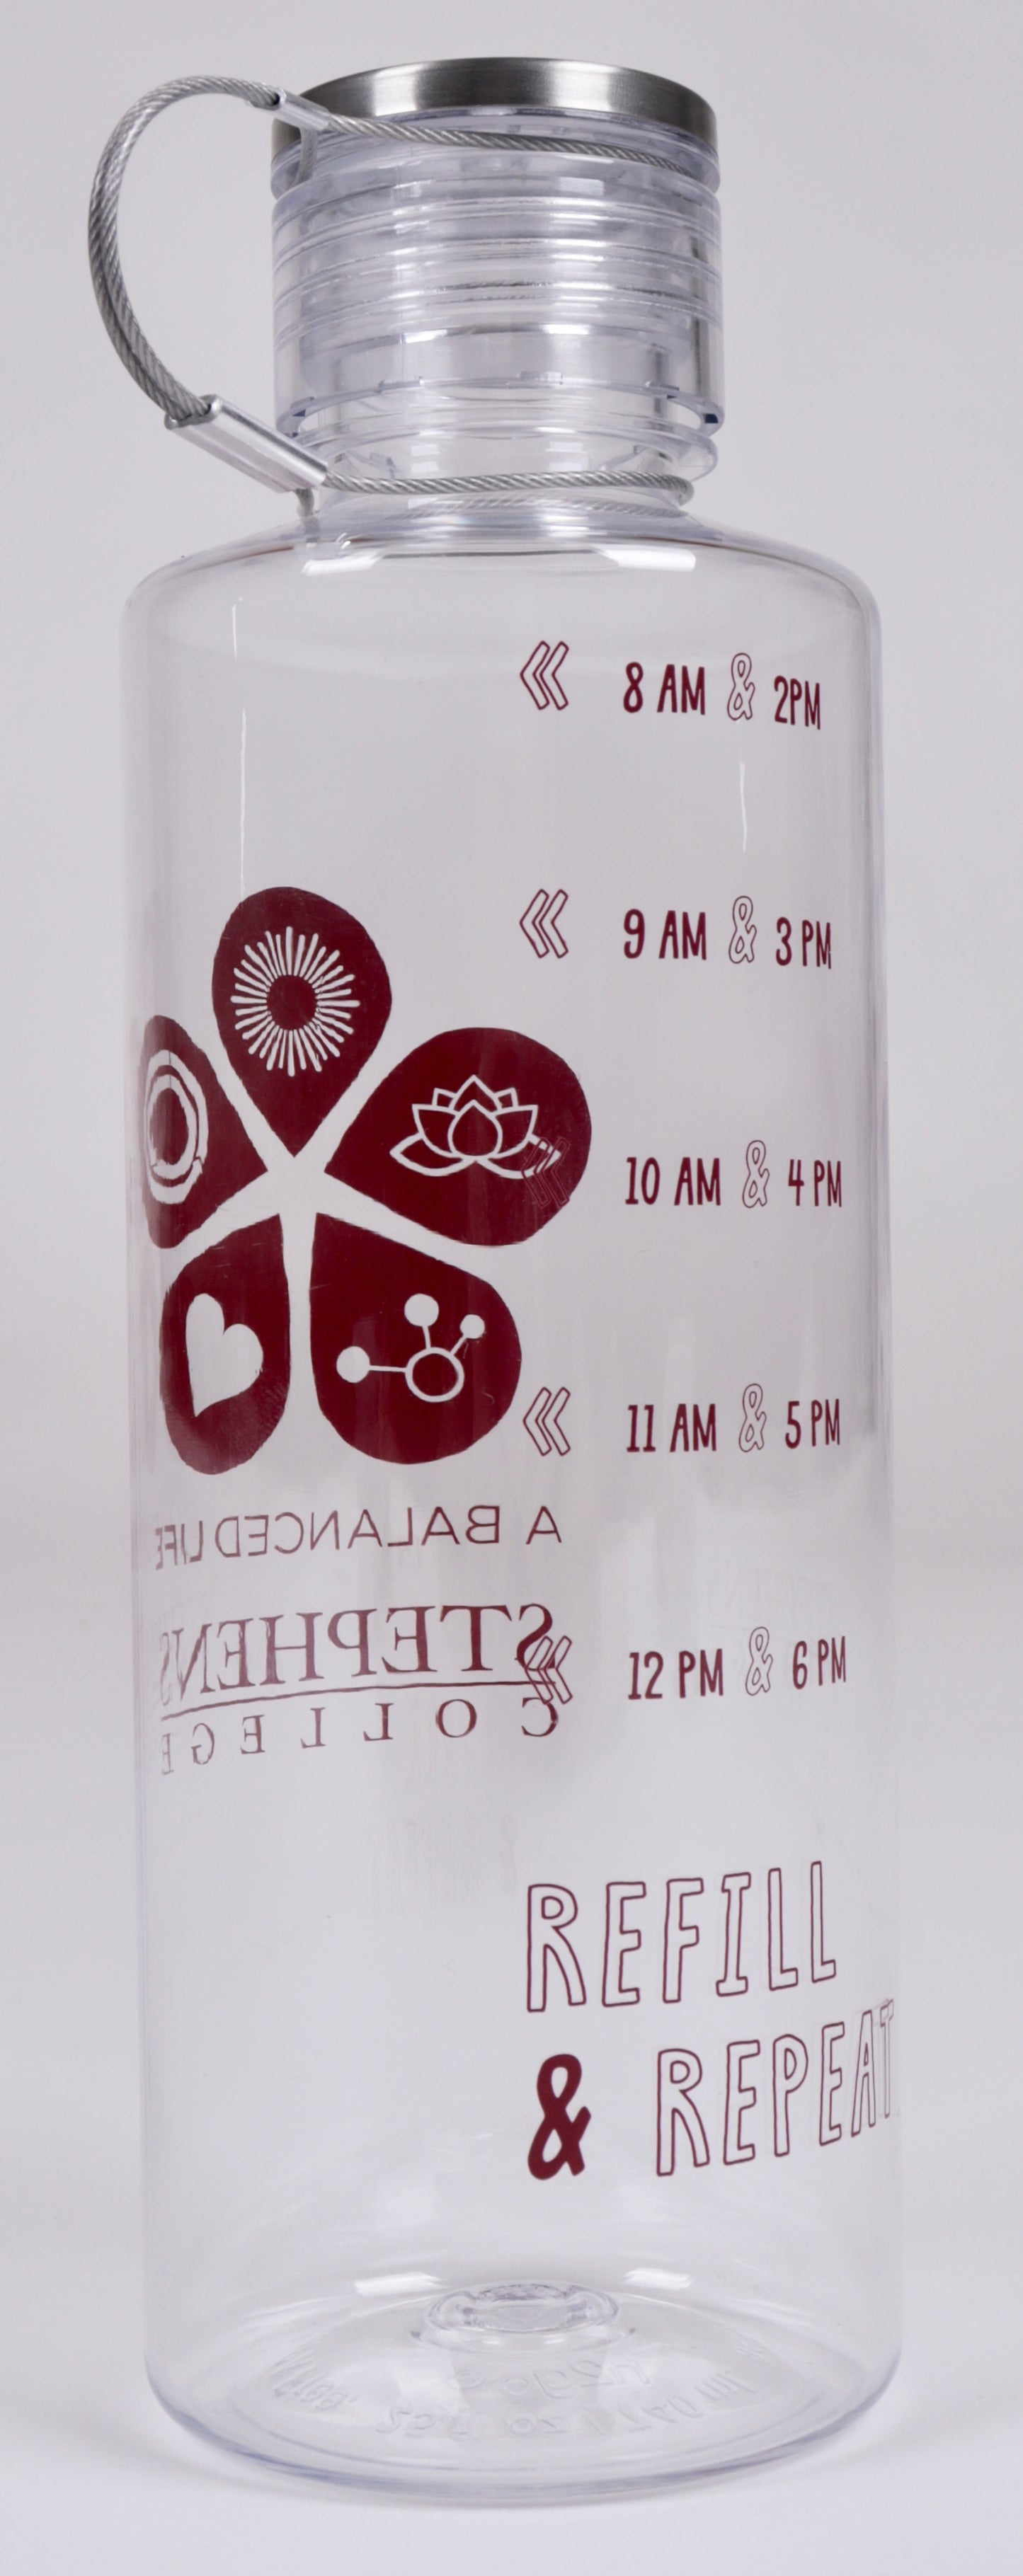 Balanced Life Water Bottle